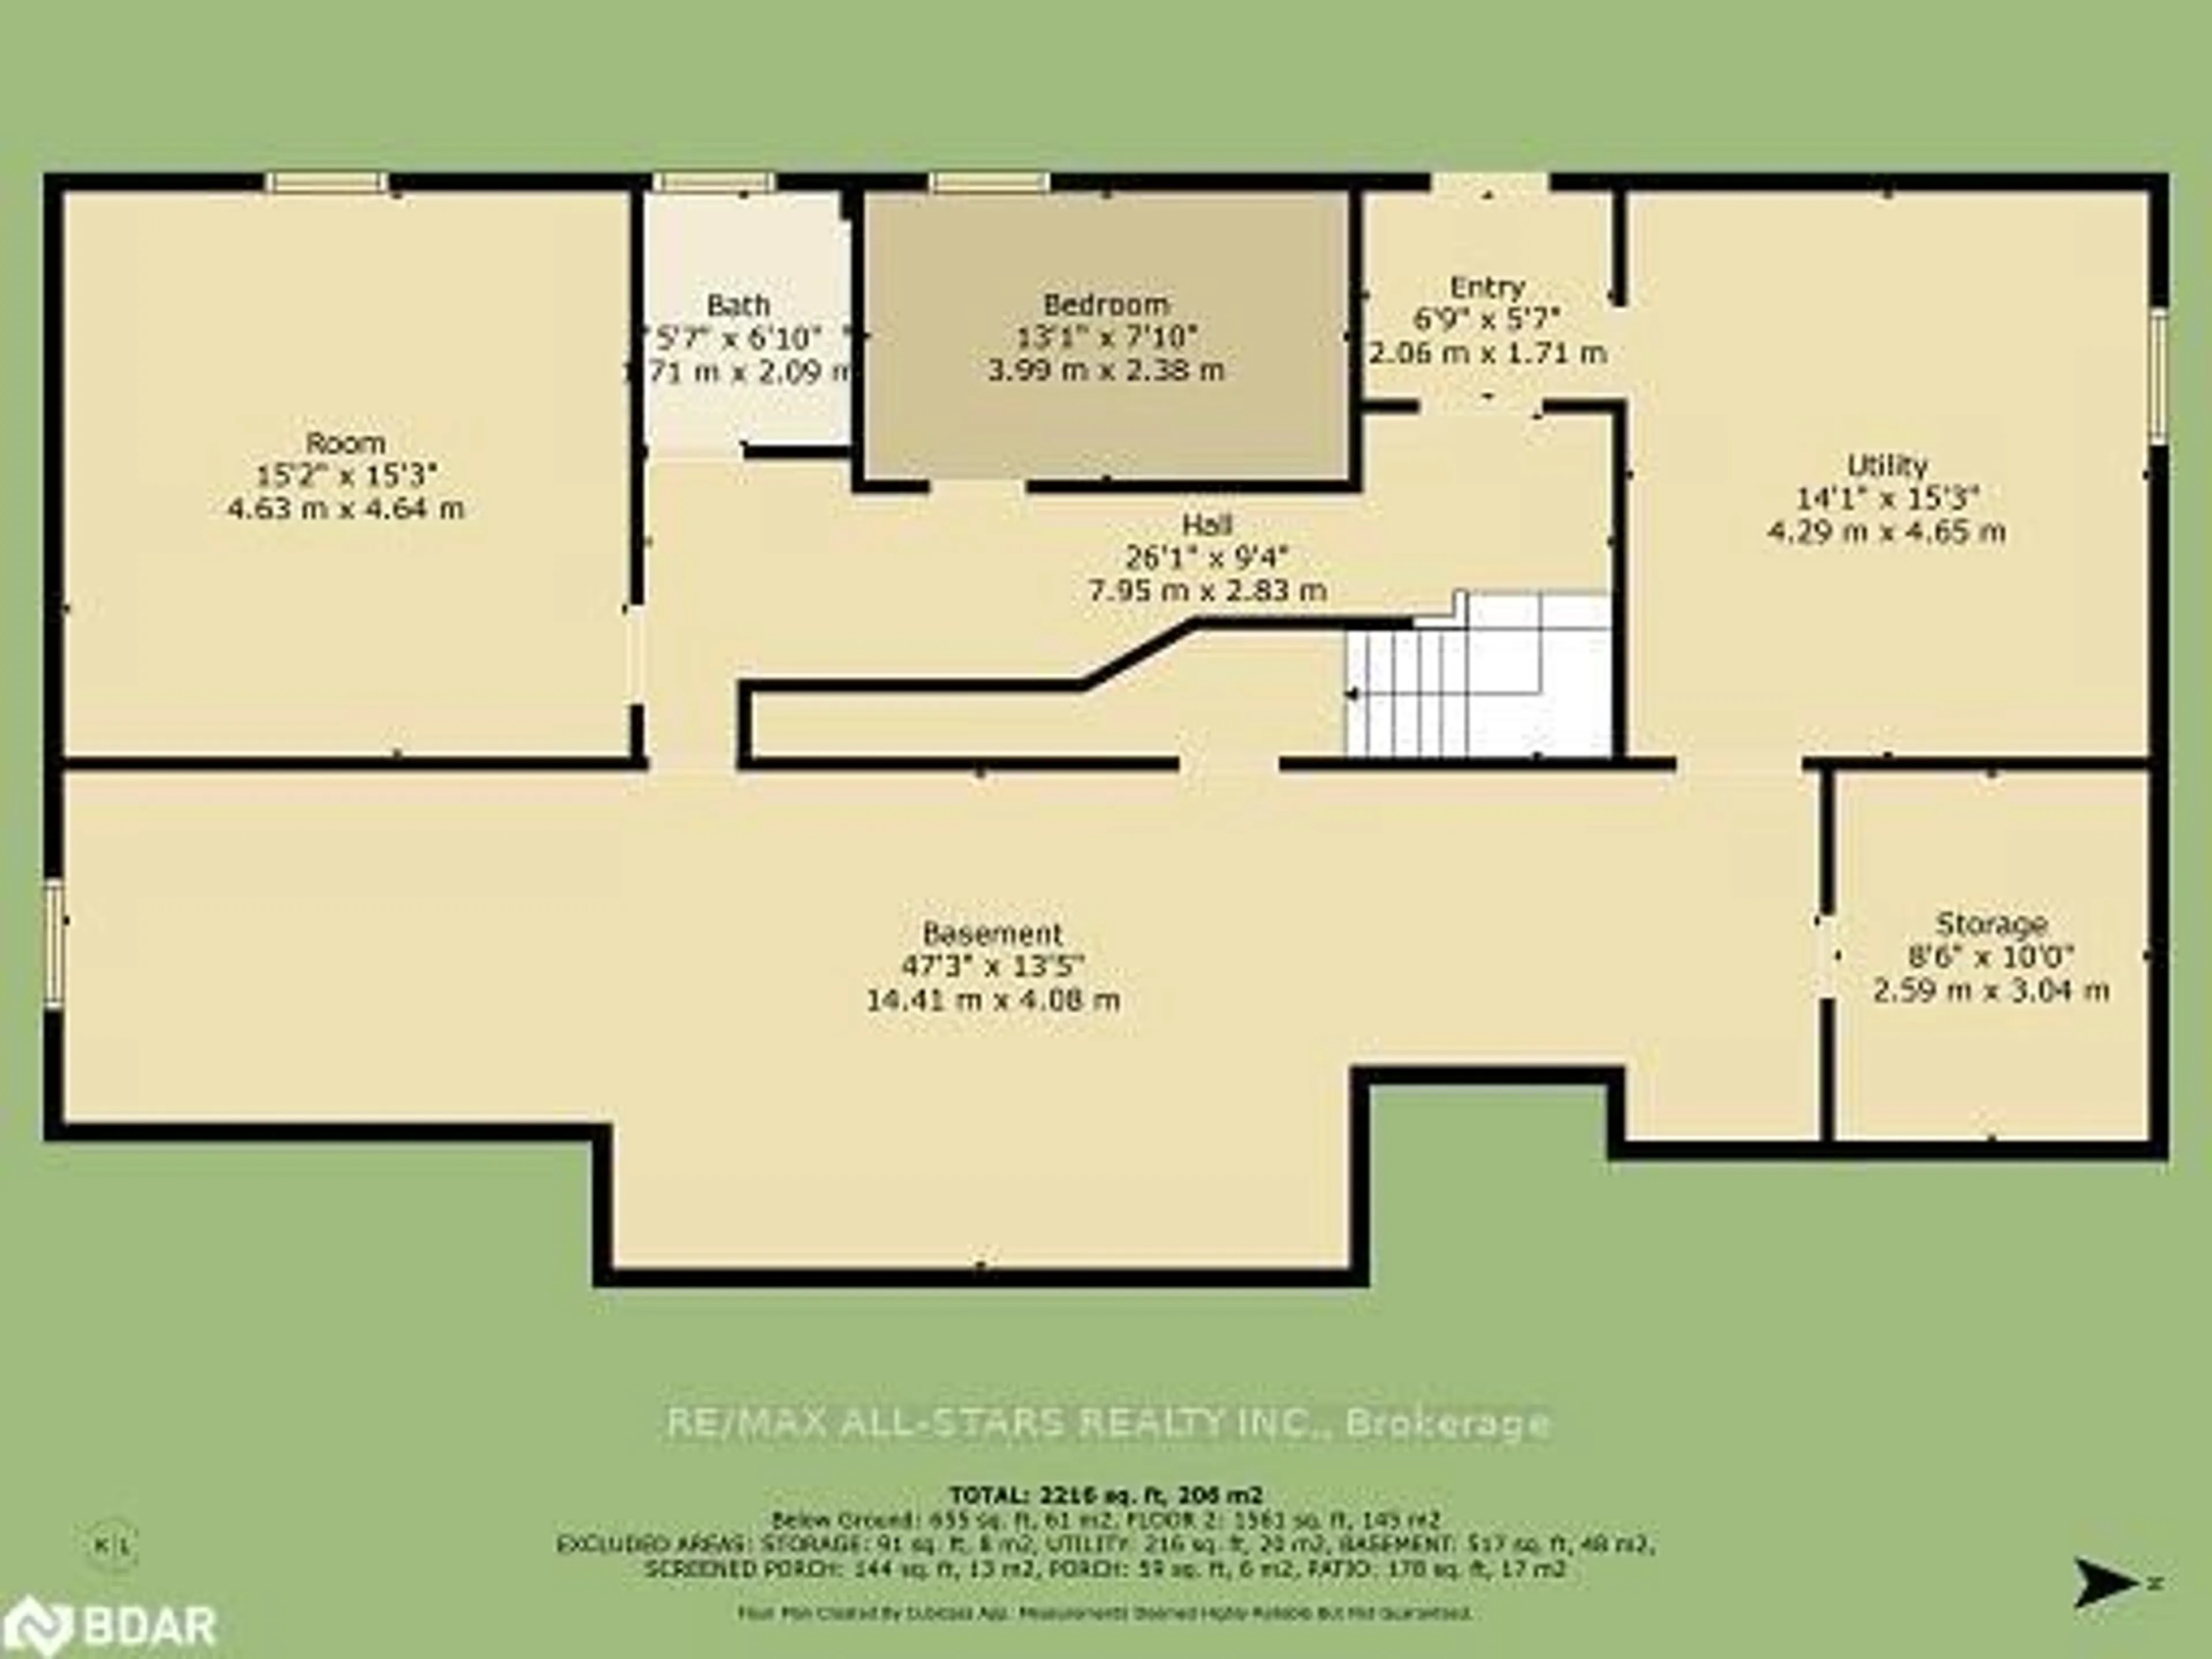 Floor plan for 729 County Rd 49, Bobcaygeon Ontario K0M 1A0